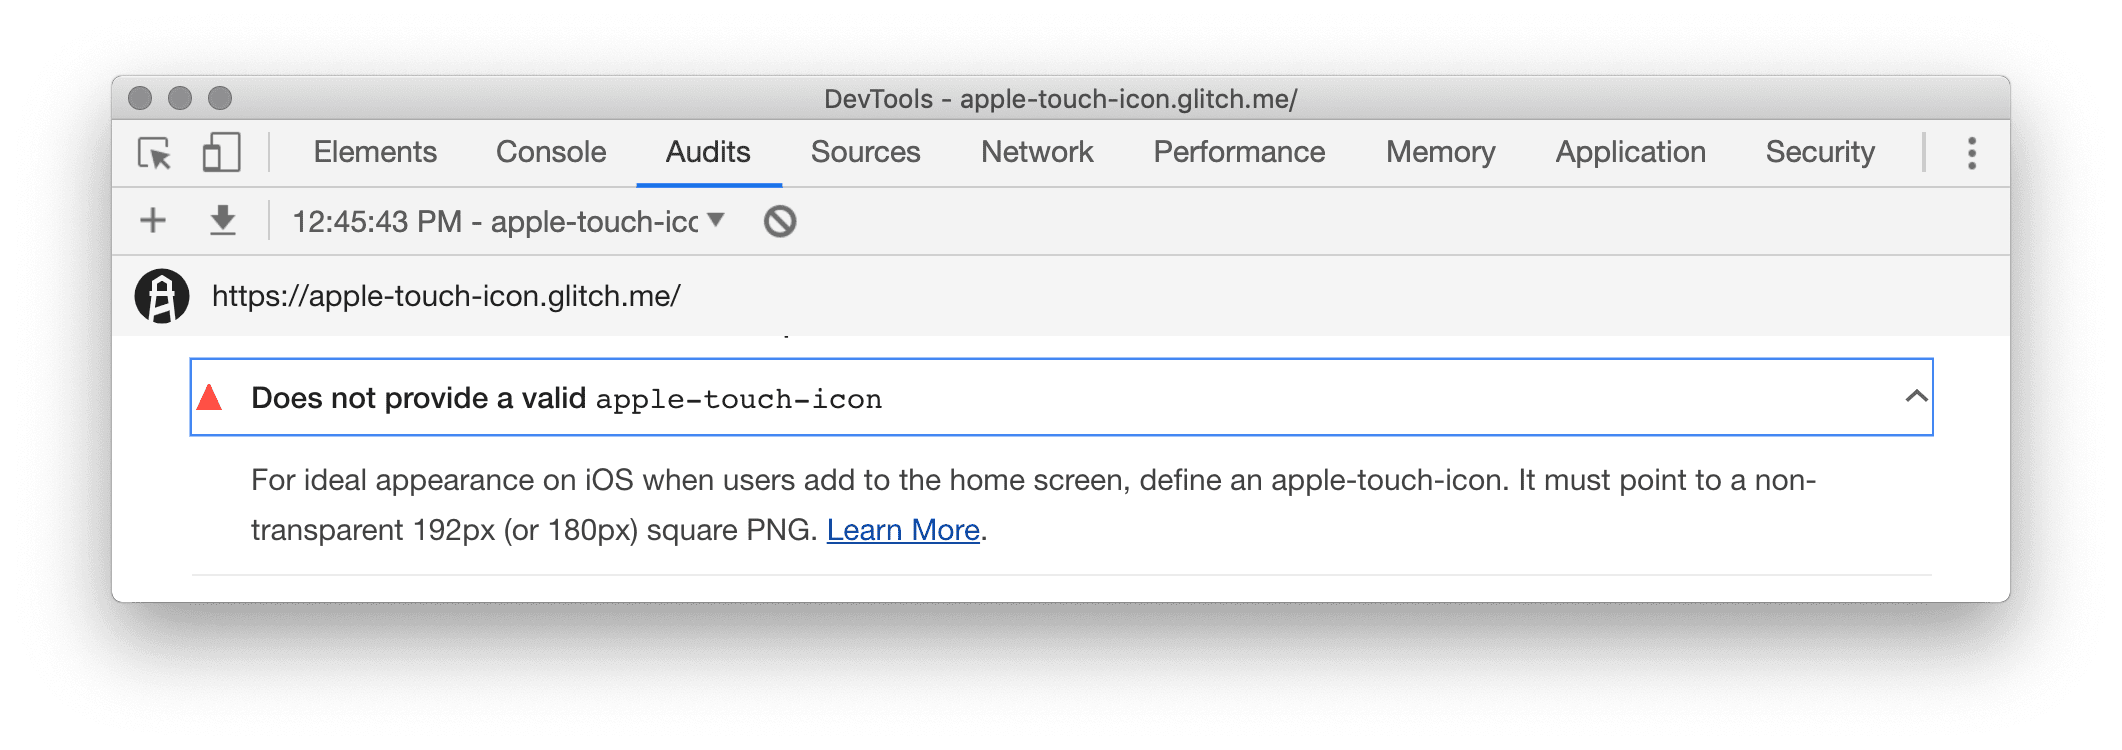 Tidak menyediakan apple-touch-icon yang valid